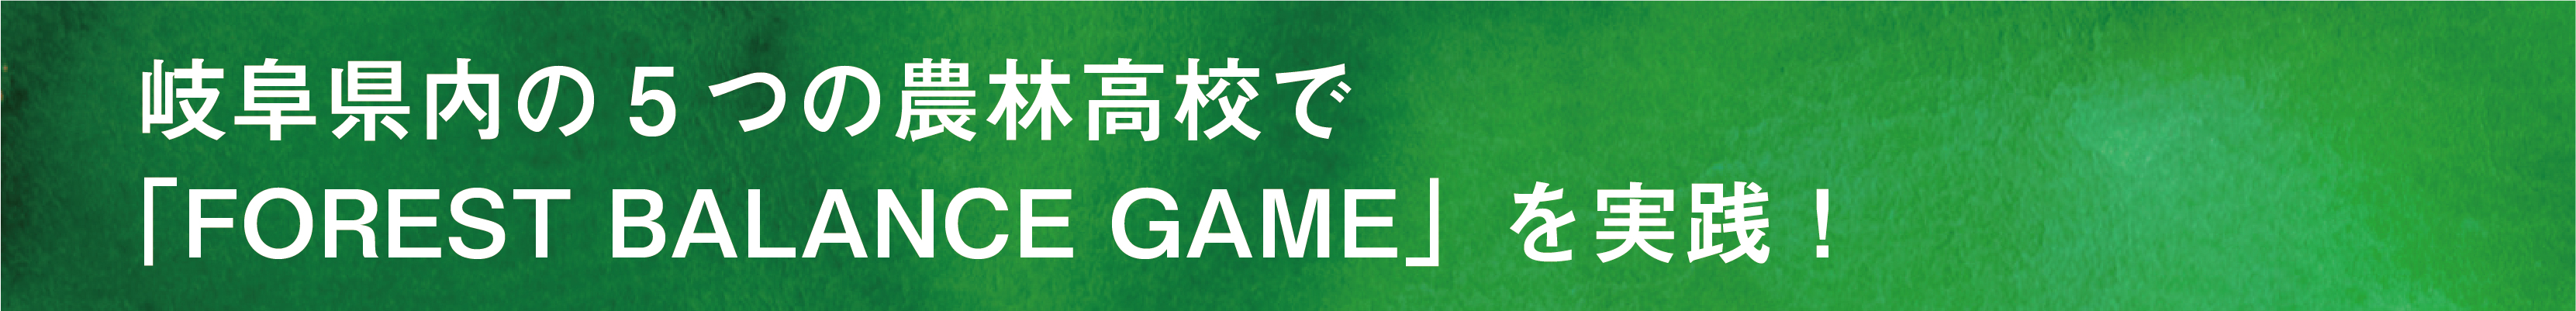 https://www.oco-s.jp/data/ec/276/林業ボードゲームクラファン見出し画像-04.jpg